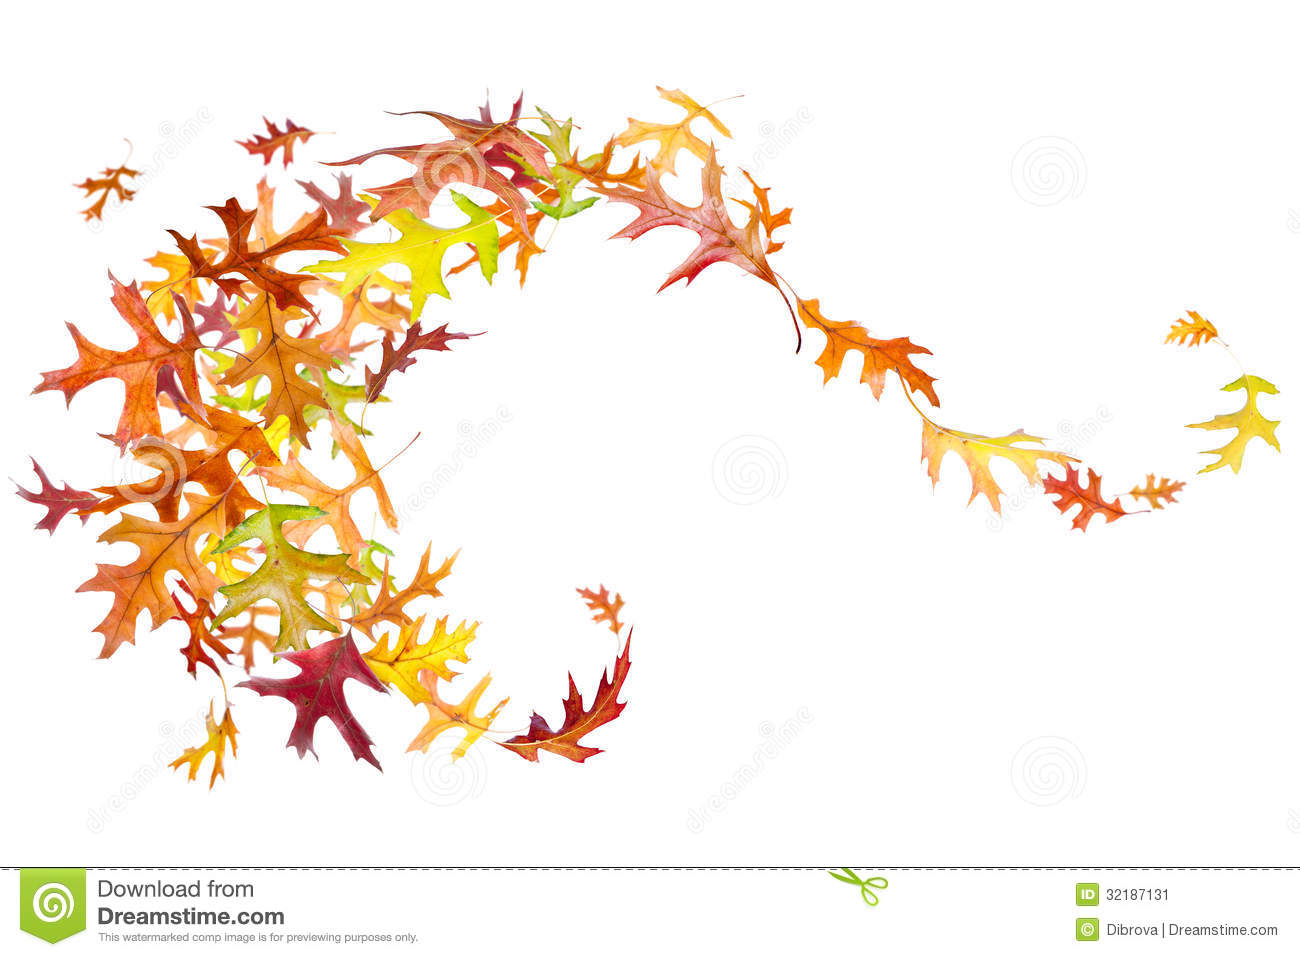 Swirl Of Autumn Leaves Stock Image   Image  32187131